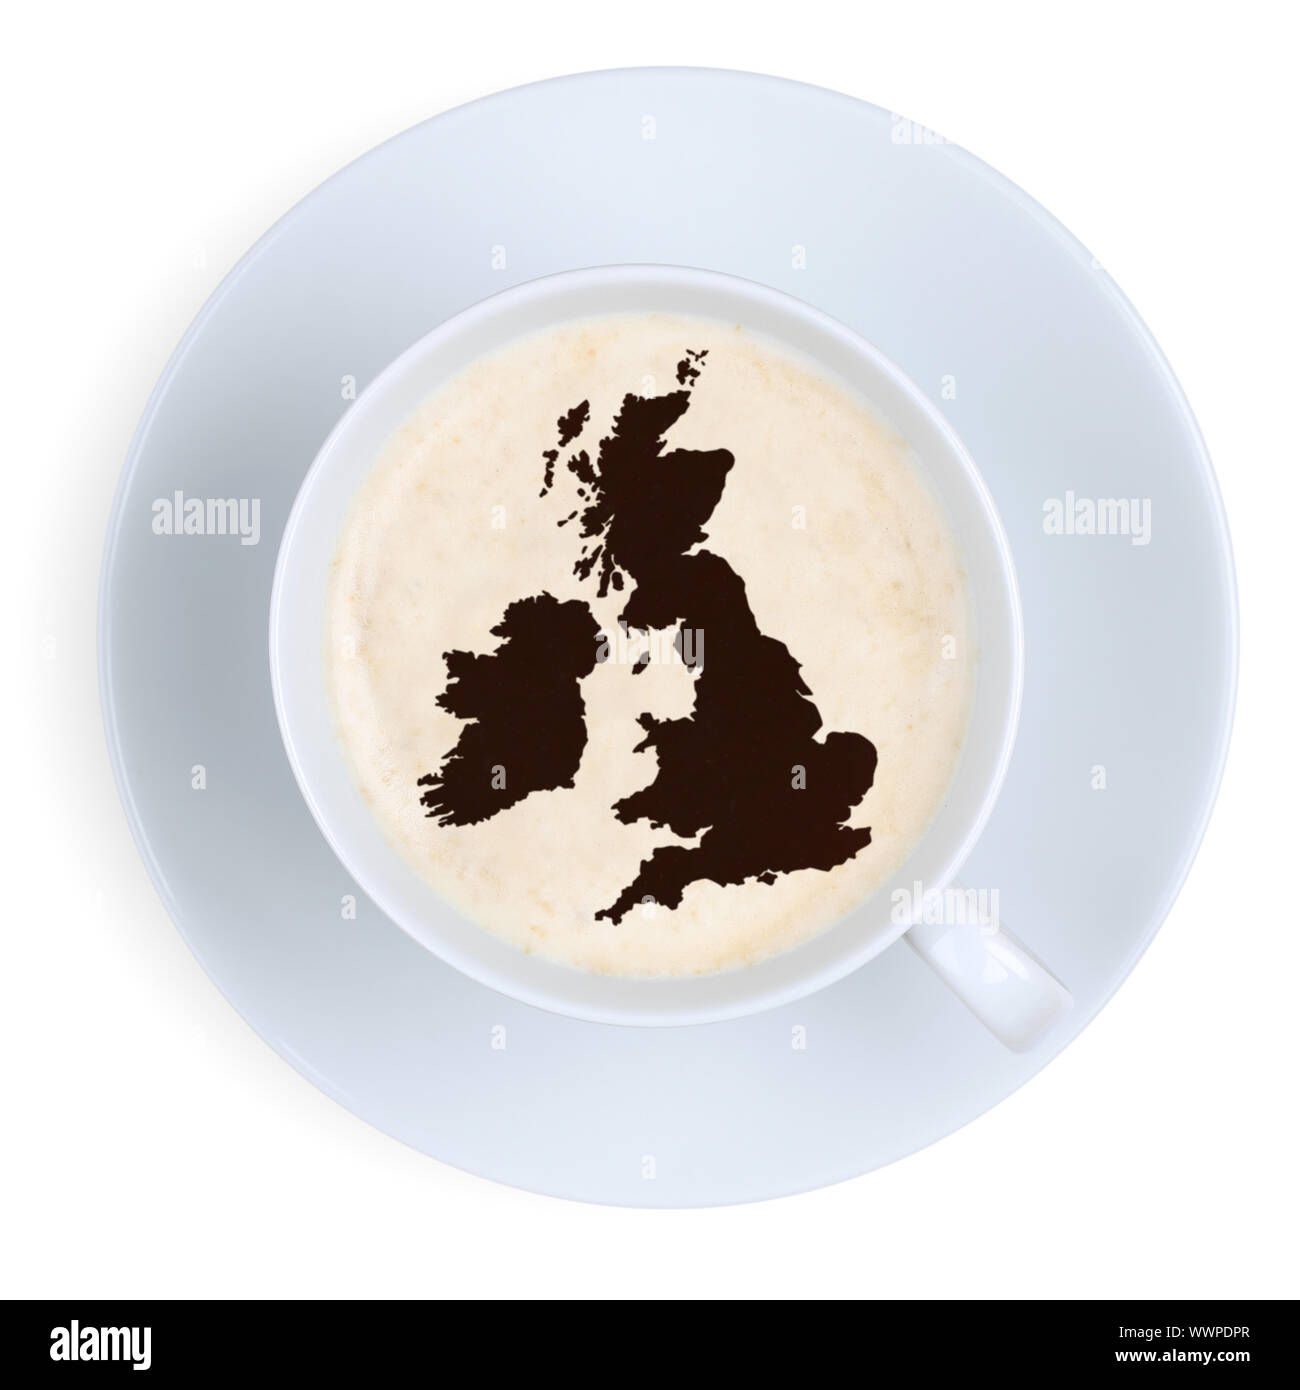 Kaffee Großbritannien und Irland Karte Kaffeepause in Tasse Kaffee Tasse Stockfoto